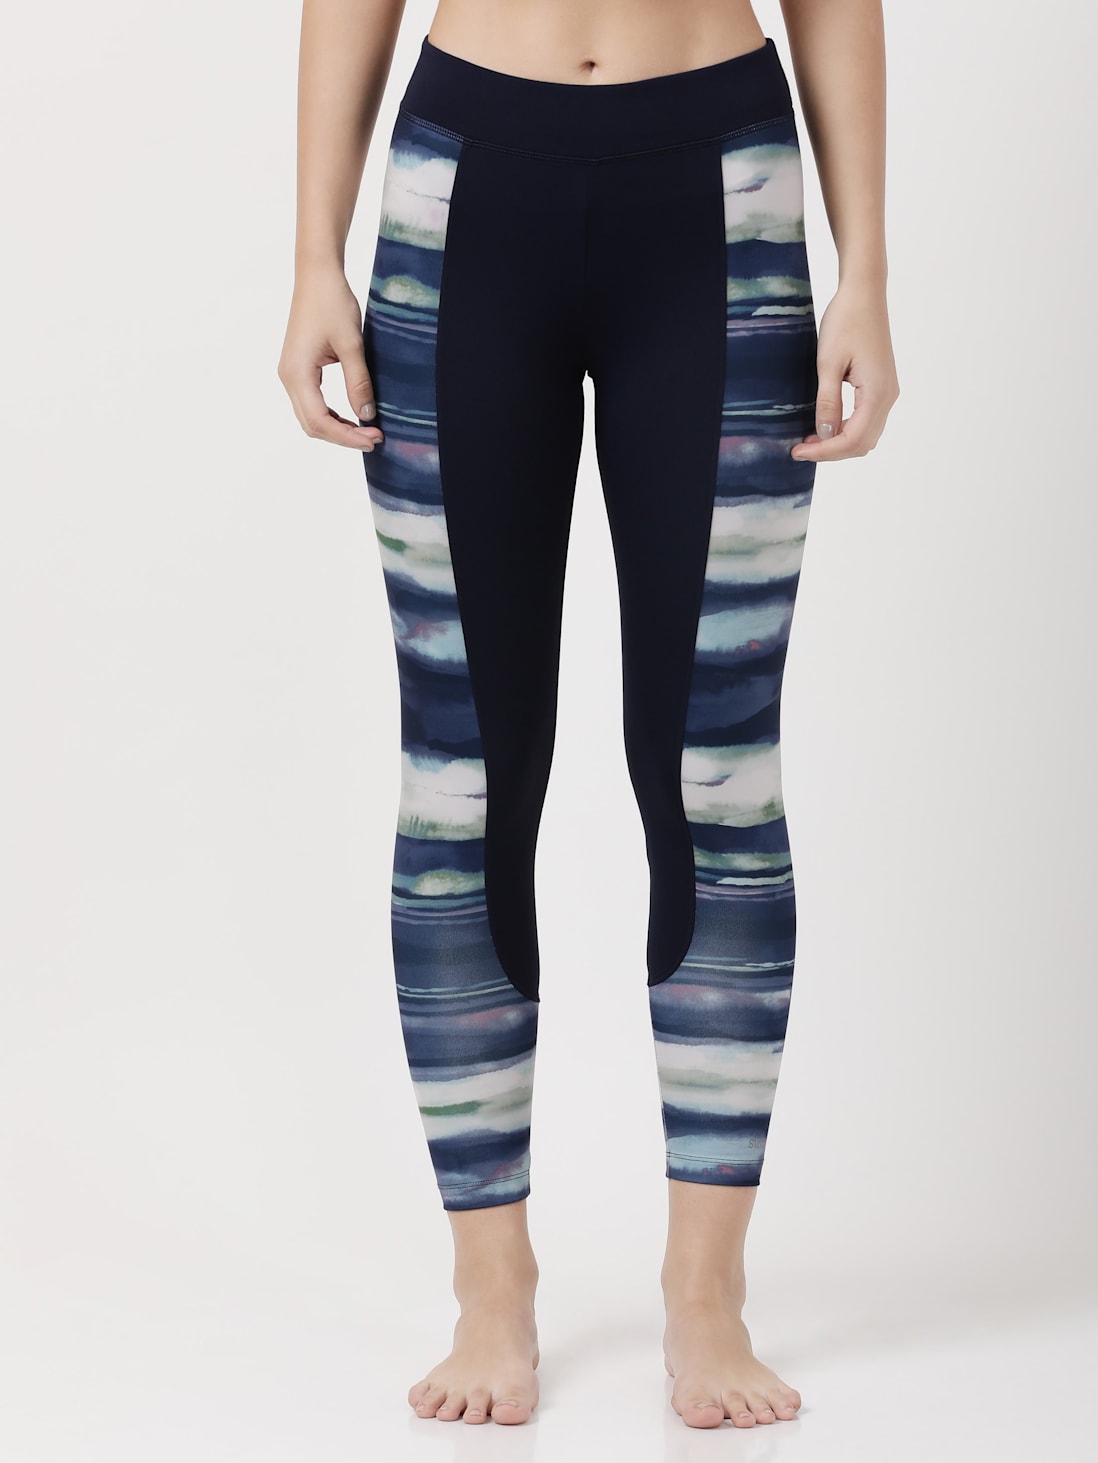 Jockey Ladies' High-Rise Yoga Pant 1630465 (Size S, Navy) - Walmart.com